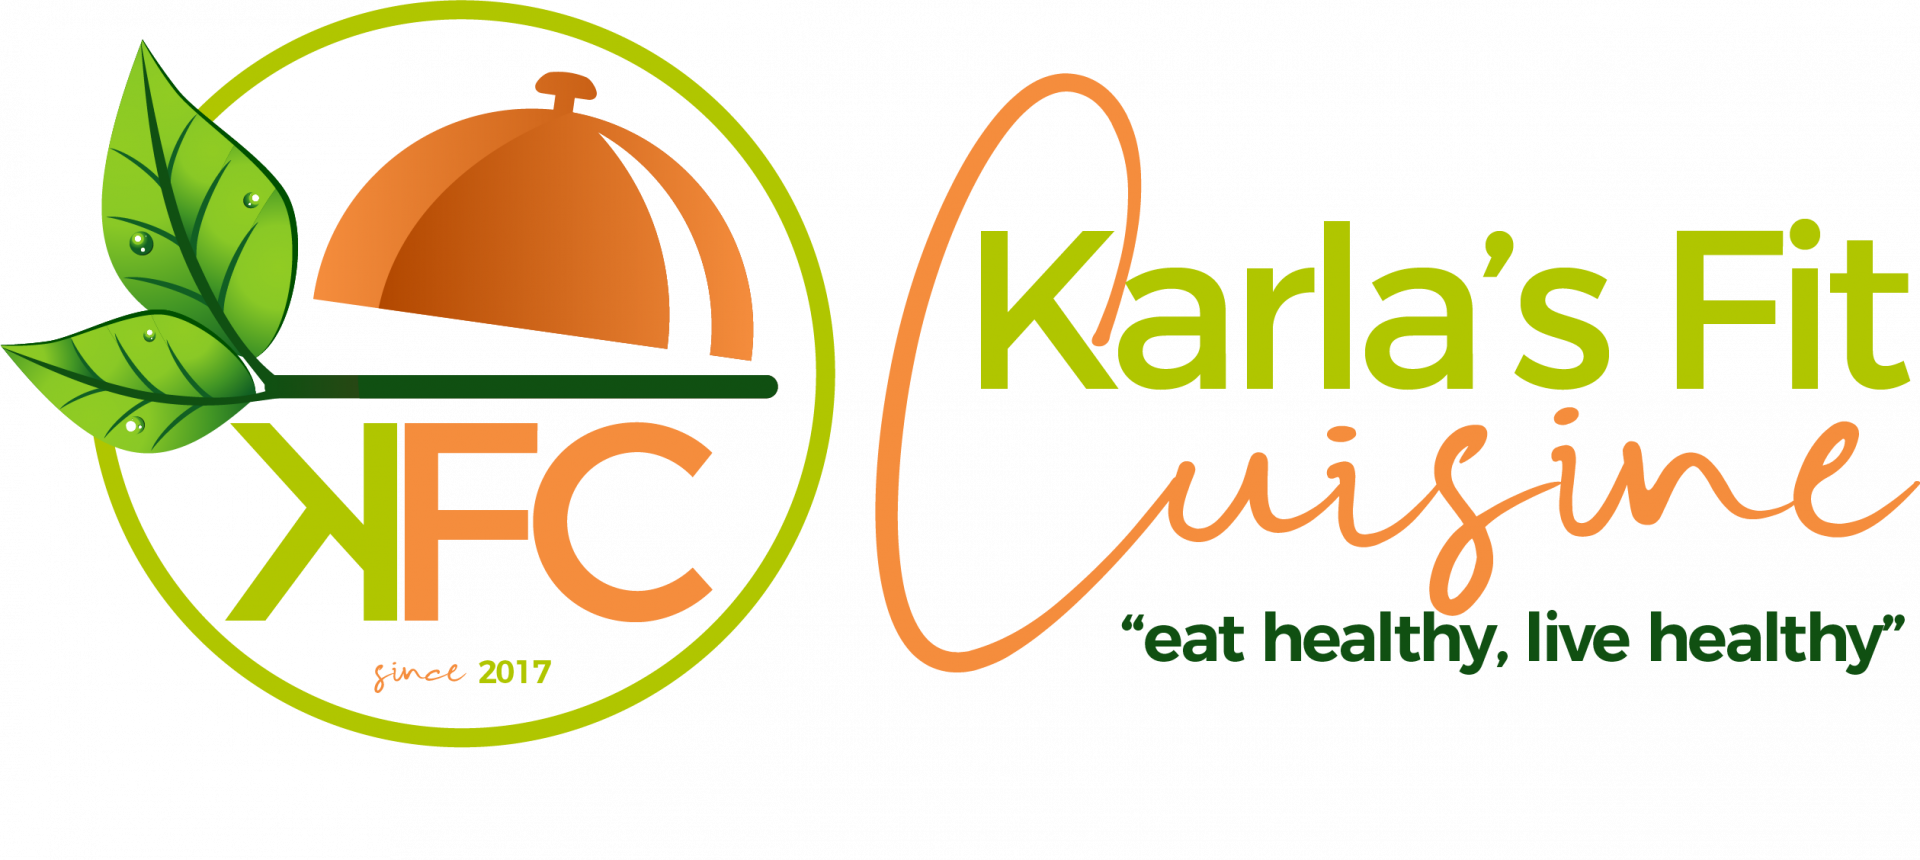 KarlasFitCuisine logo